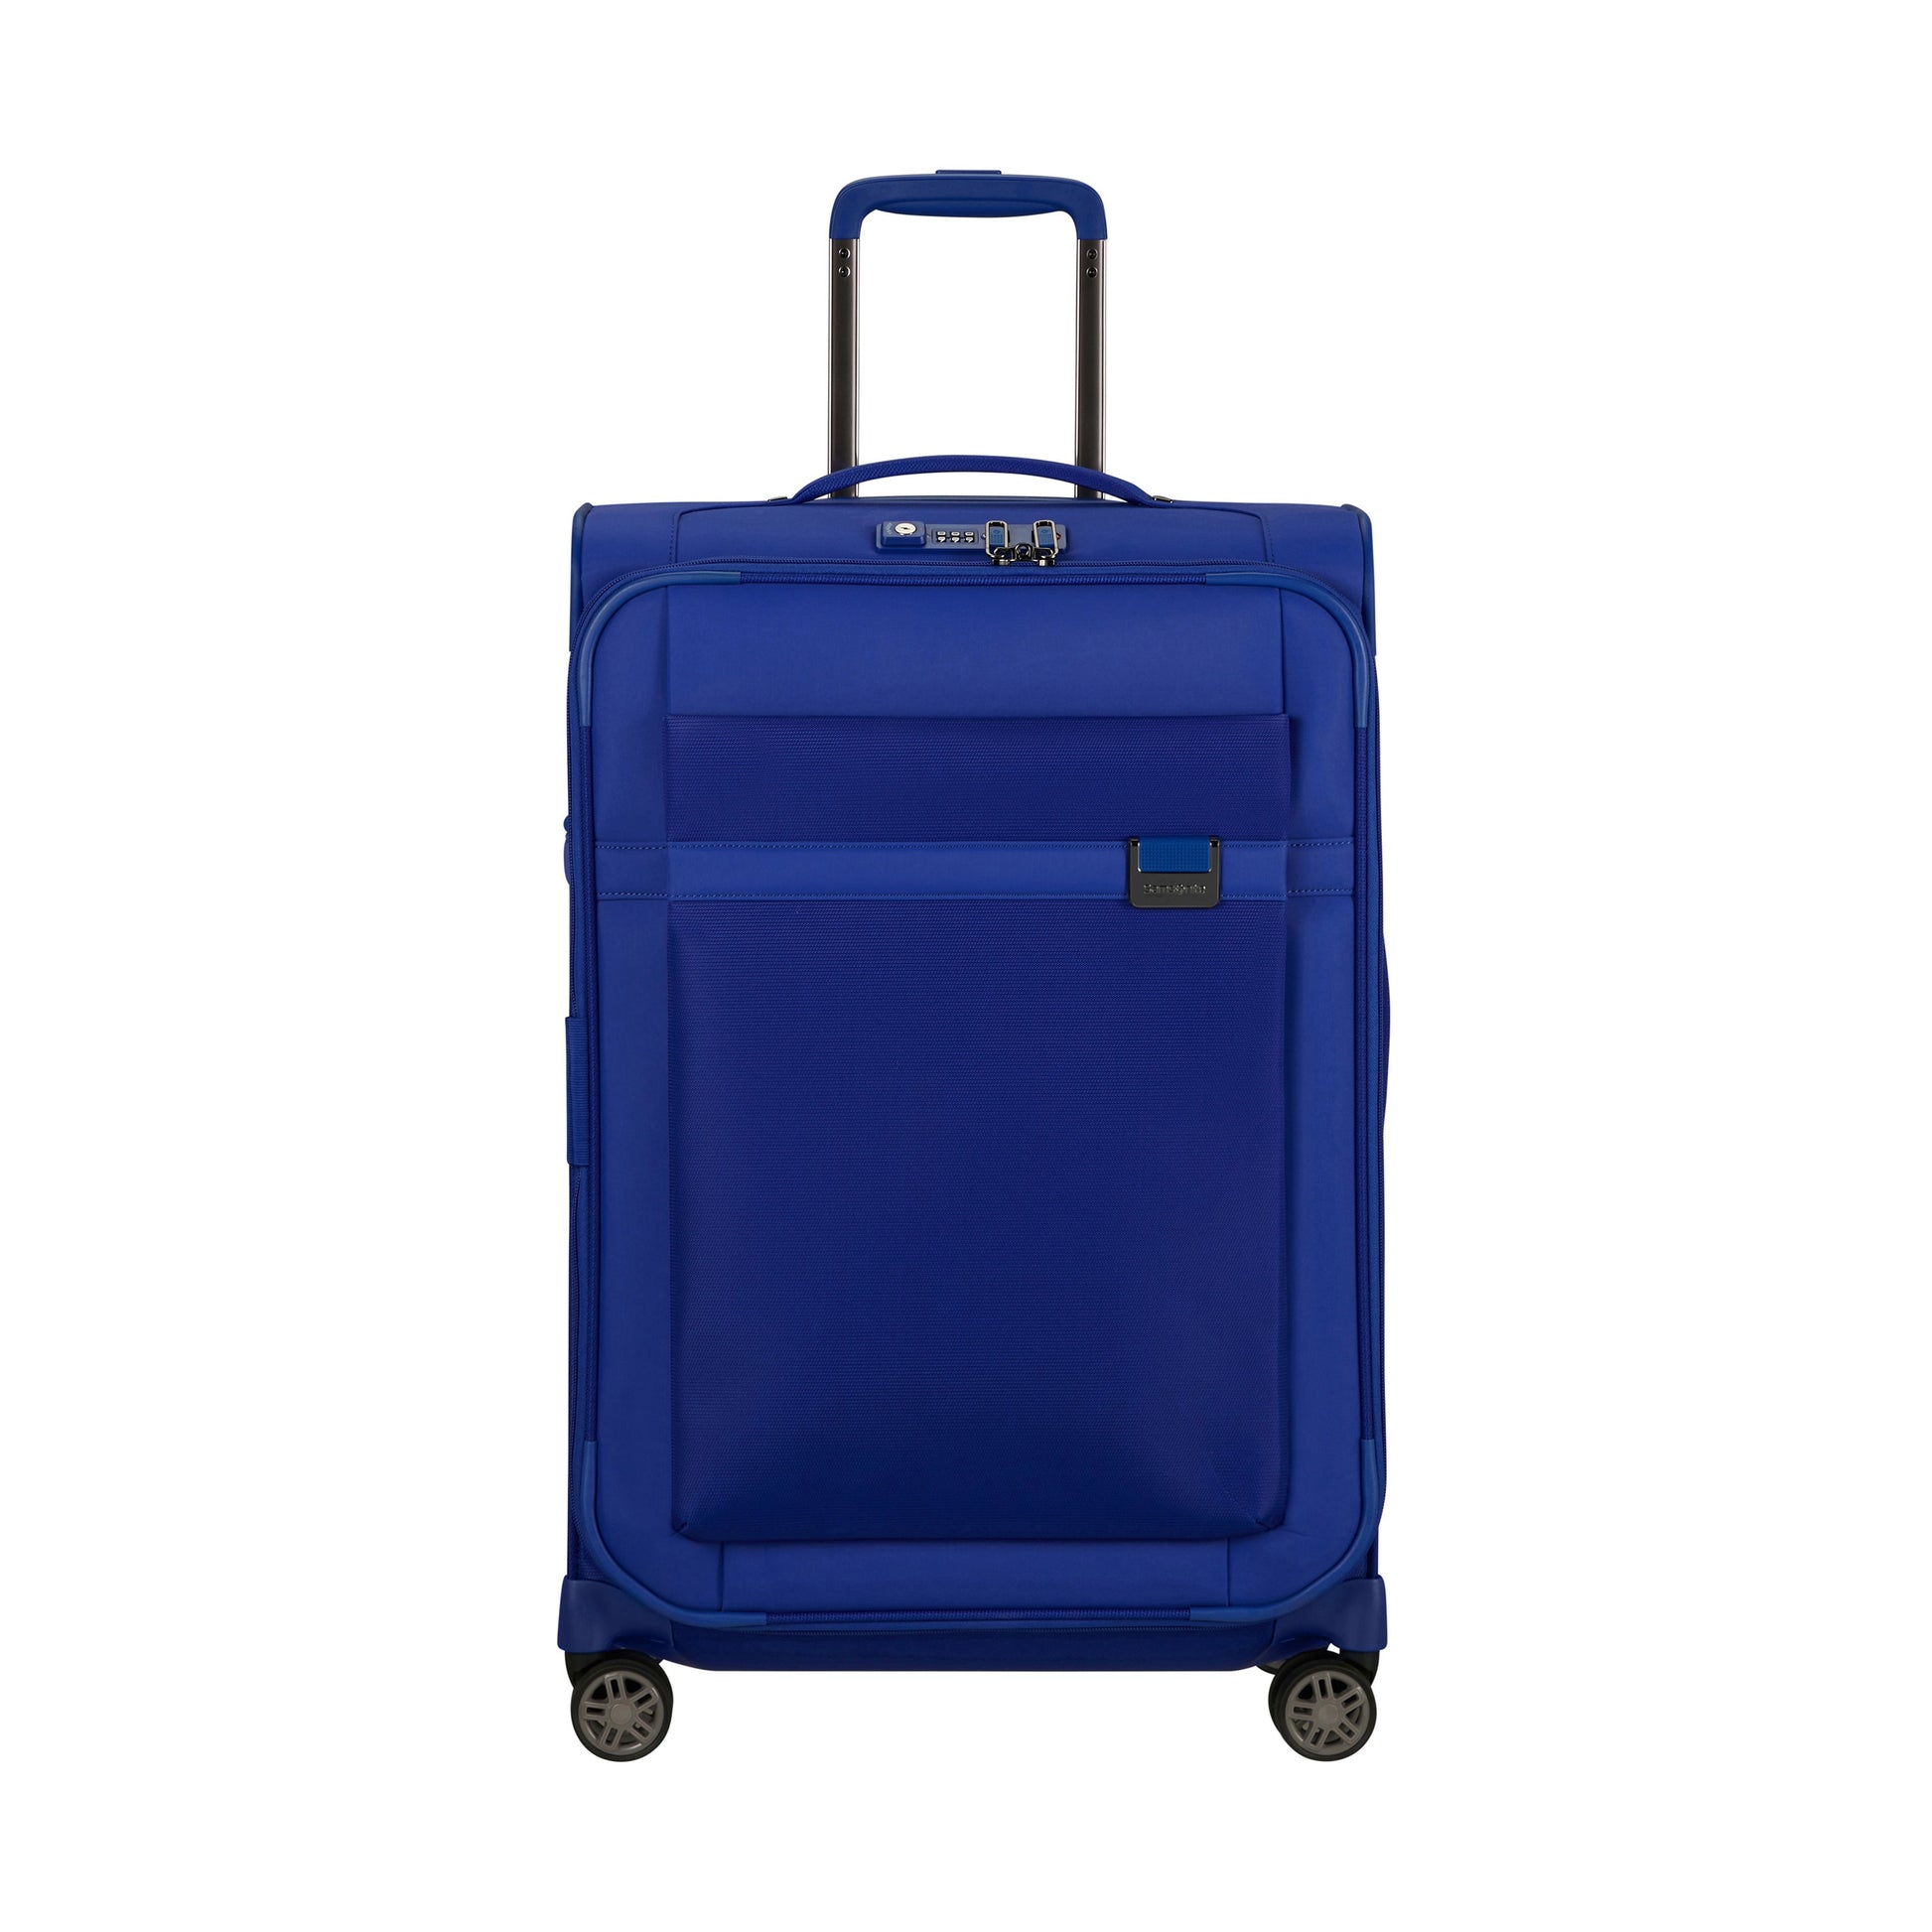 Samsonite Airea Spinner Medium Luggage